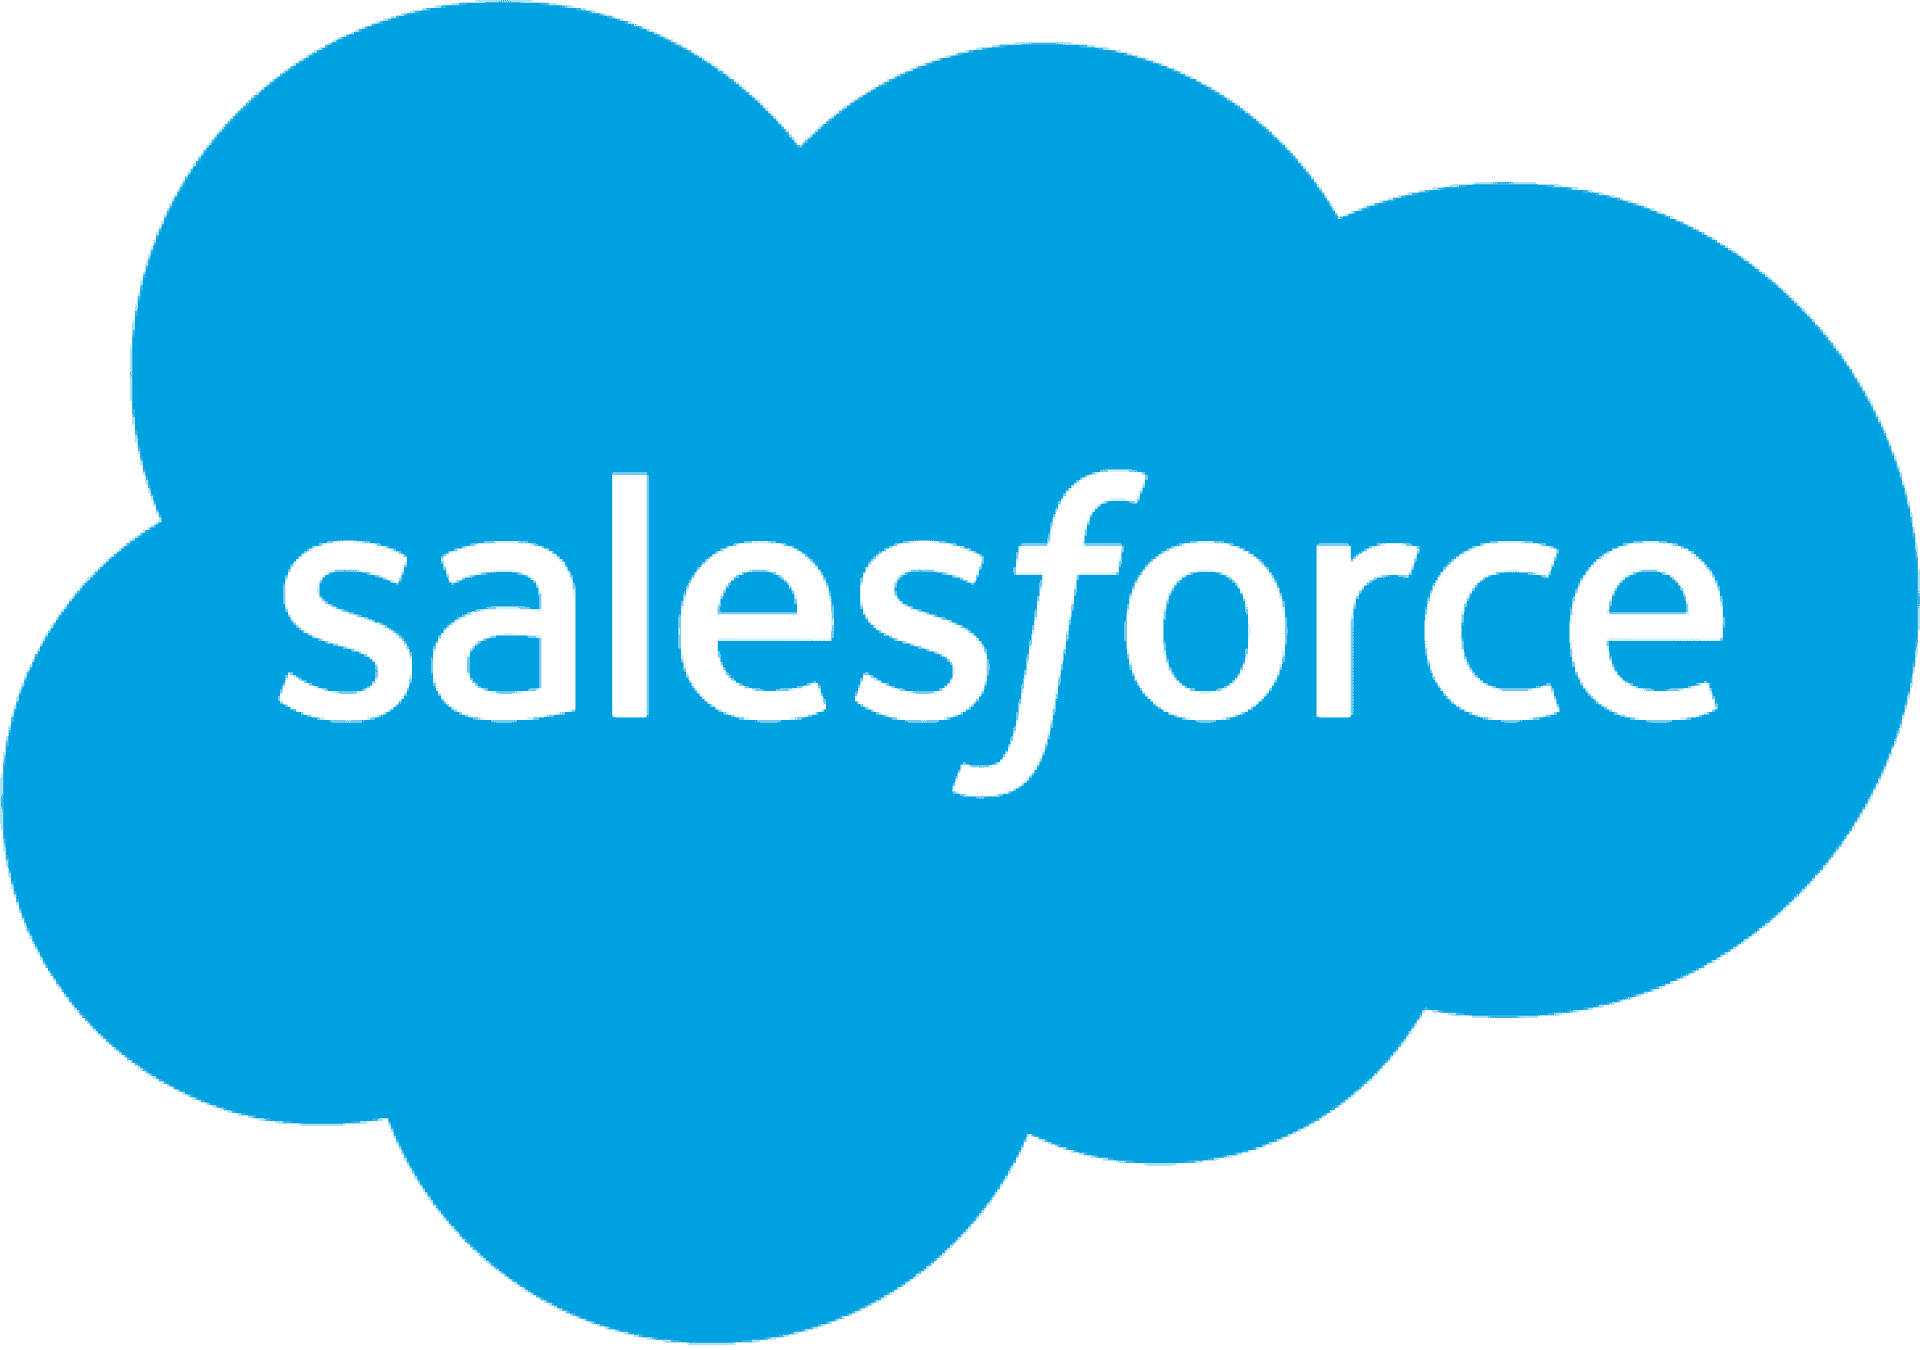 quickbase vs salesforce, salesforce vs quickbase, quickbase salesforce, quickbase crm, quickbase crm vs salesforce, quickbase customers